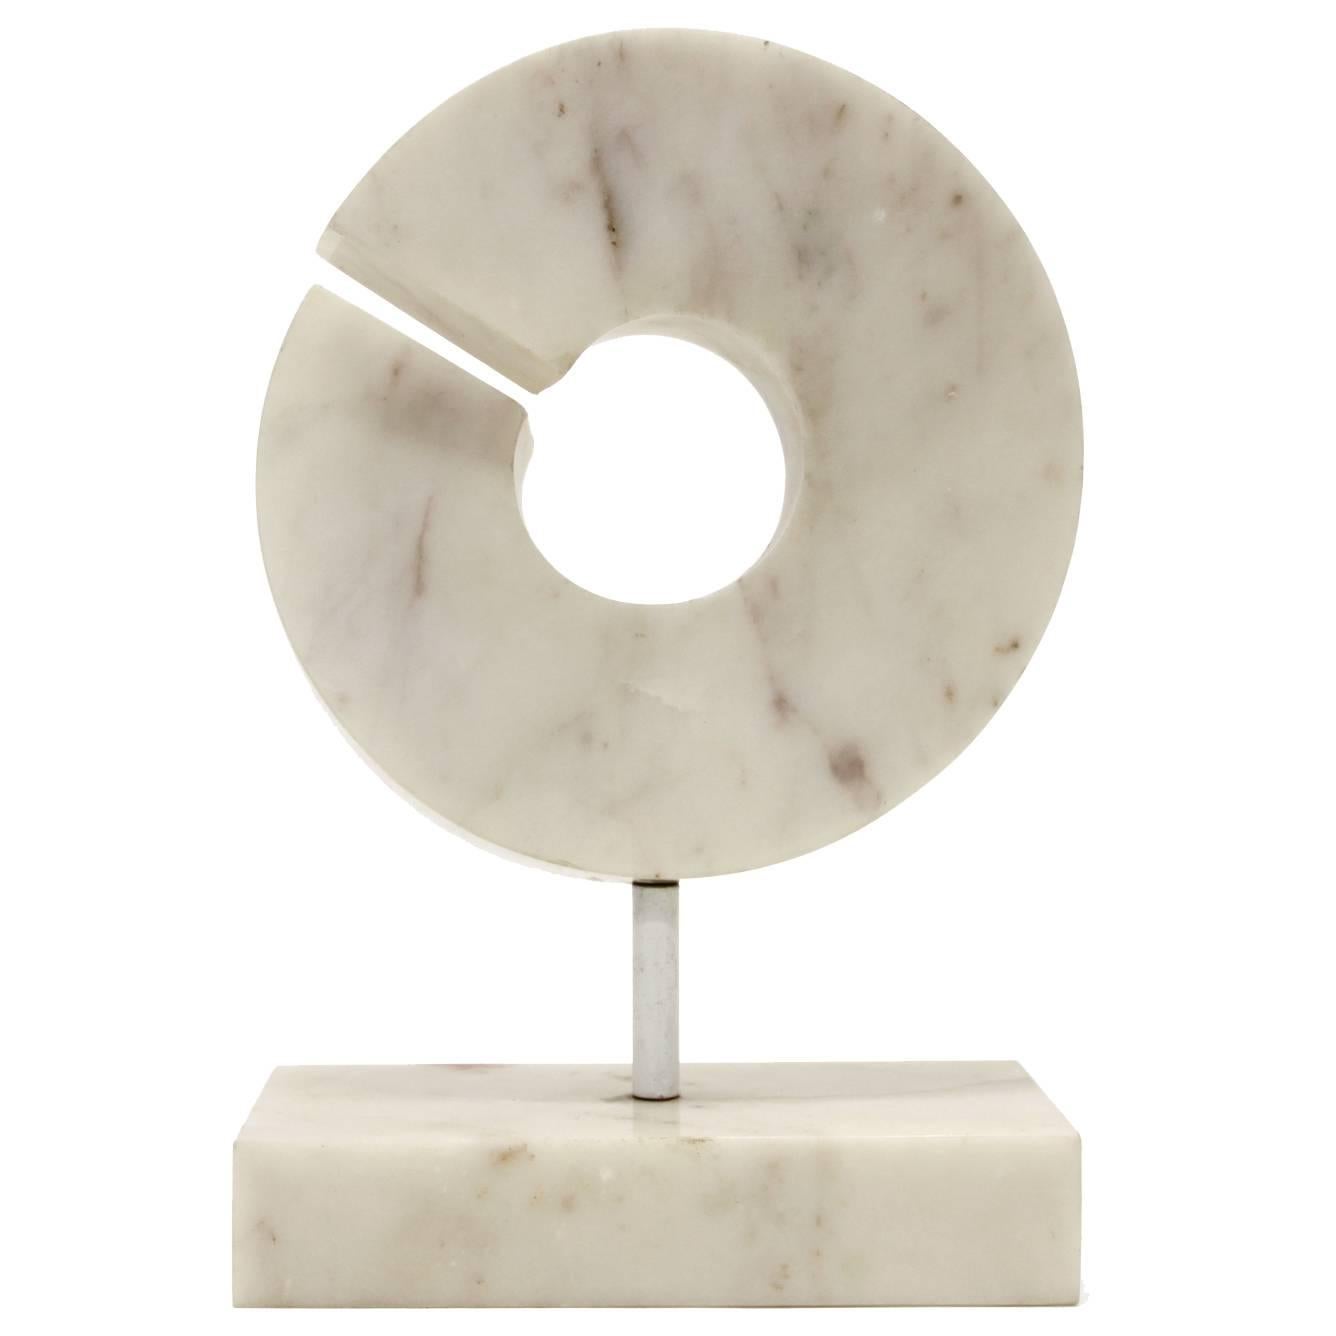 Modernist Marble Sculpture by Hilde Van Sumere